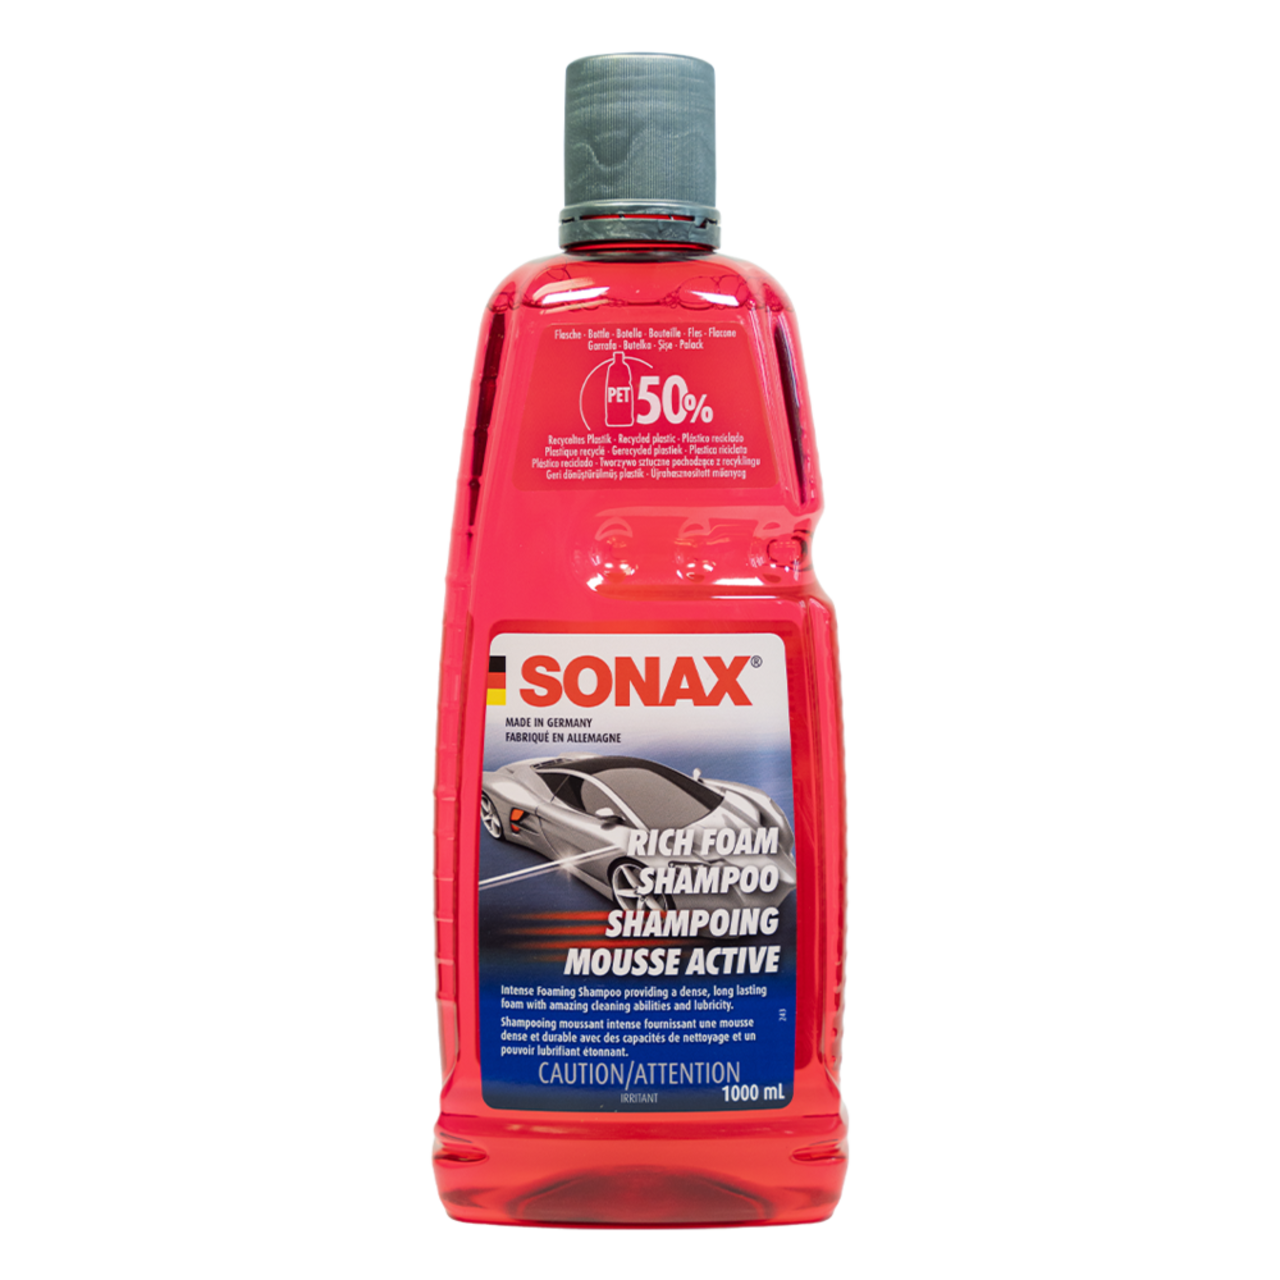 Sonax AntiFreeze & Clear View Concentrat 1 L